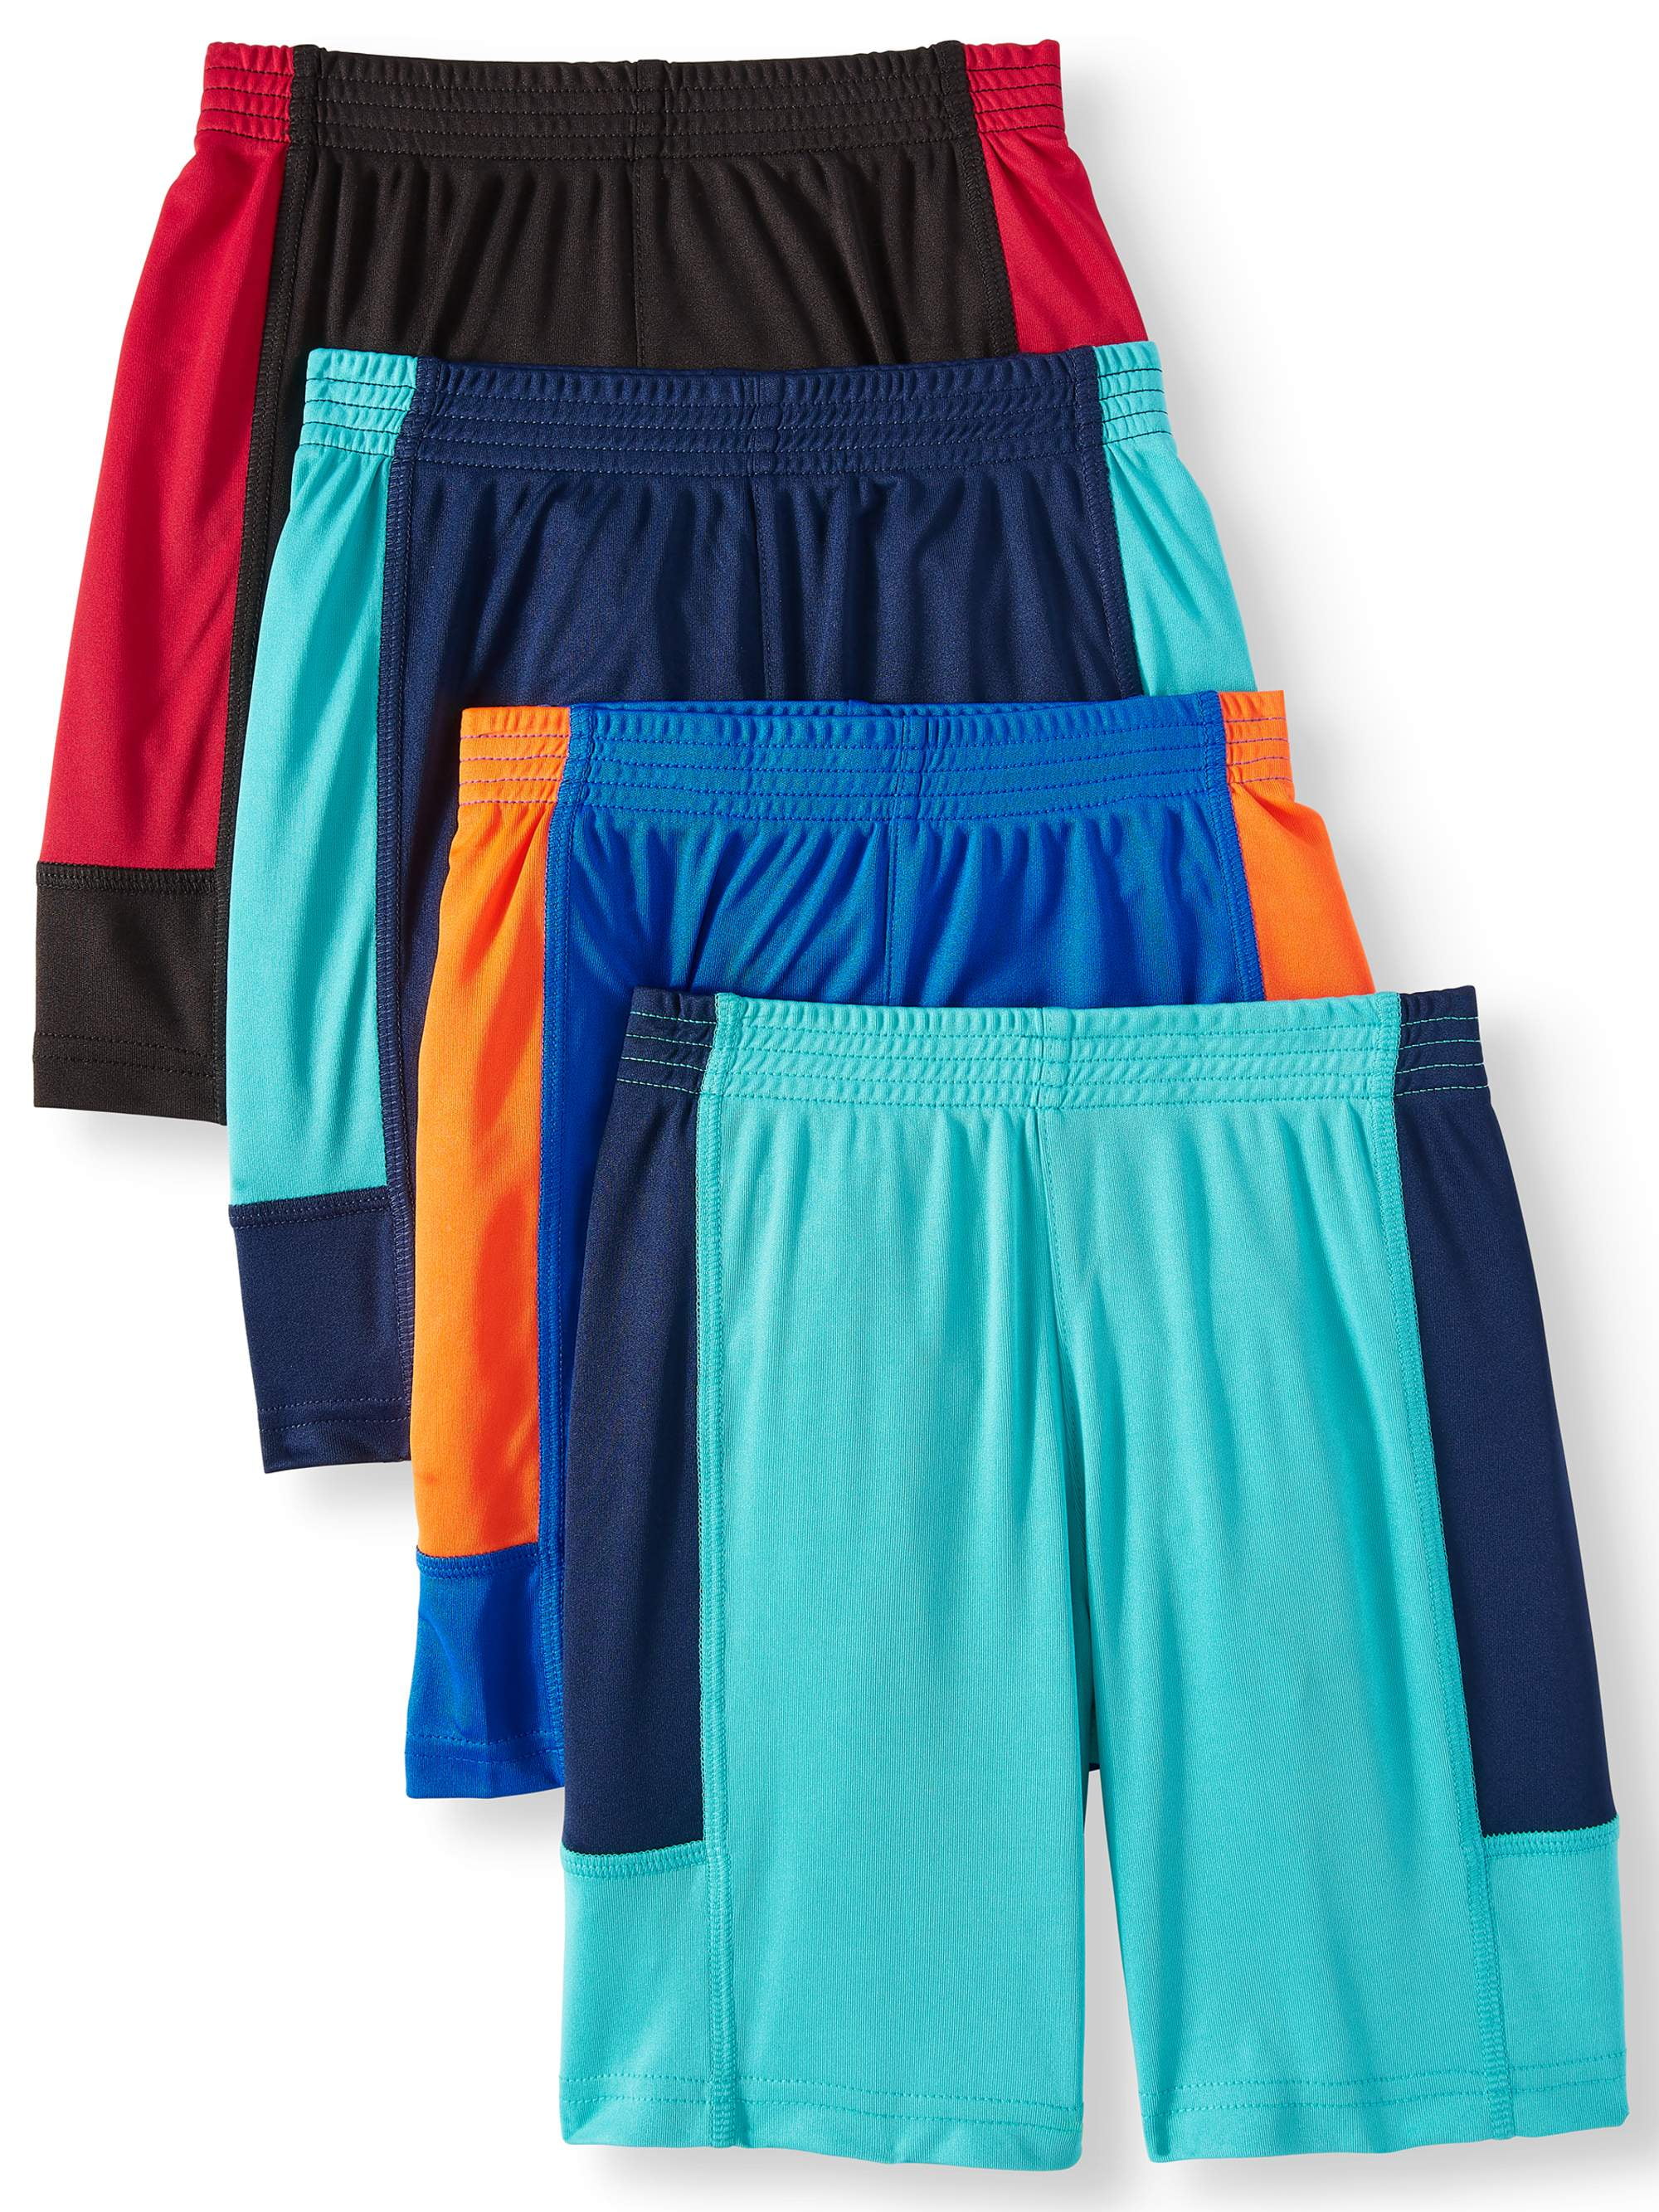 Wrights - Wrights Colorblock Comfortable Active Shorts, 4-pack (Toddler Boys)  - Walmart.com - Walmart.com